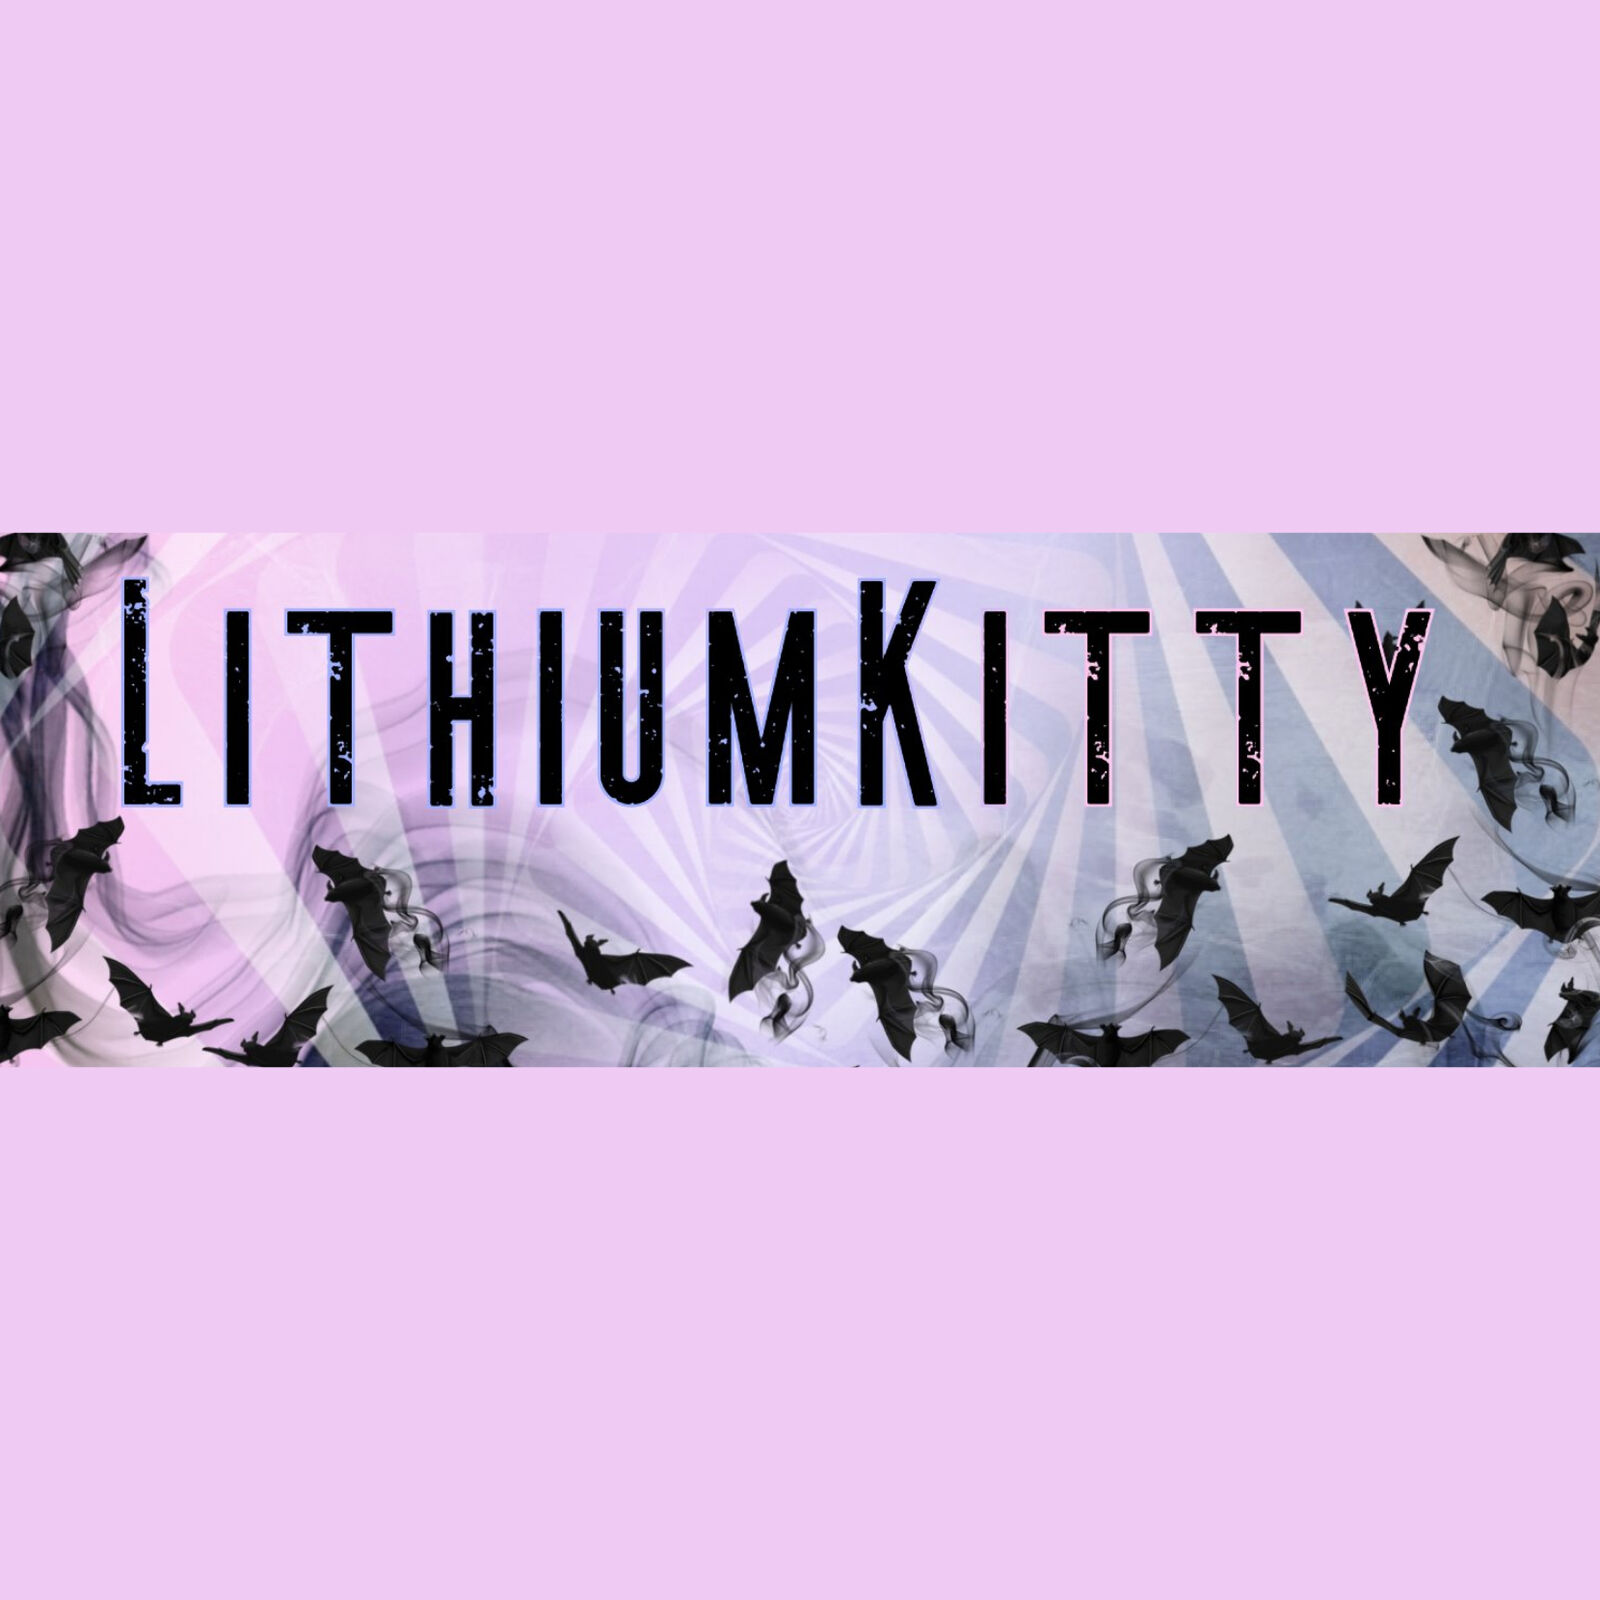 See Lithium Kitty profile